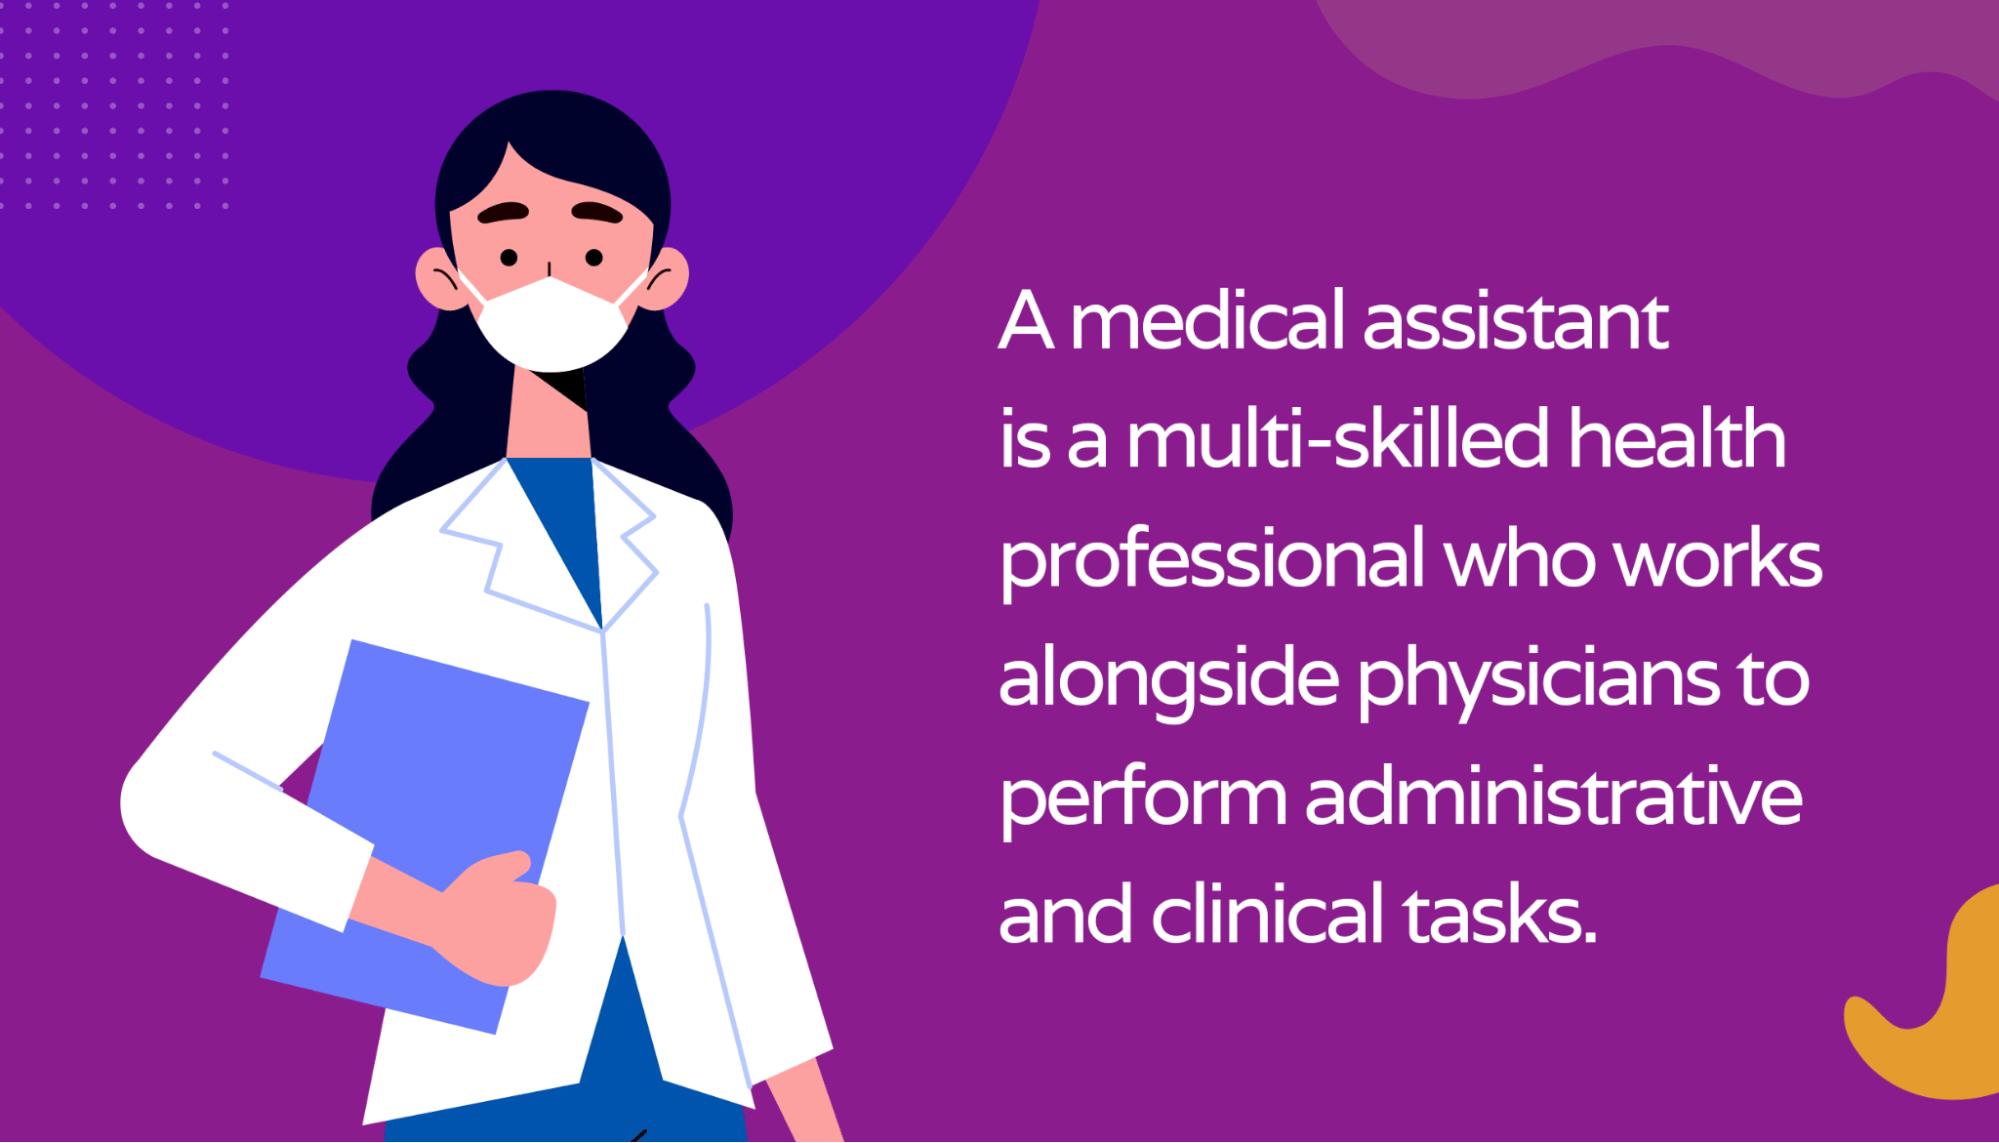 Defining a medical assistant